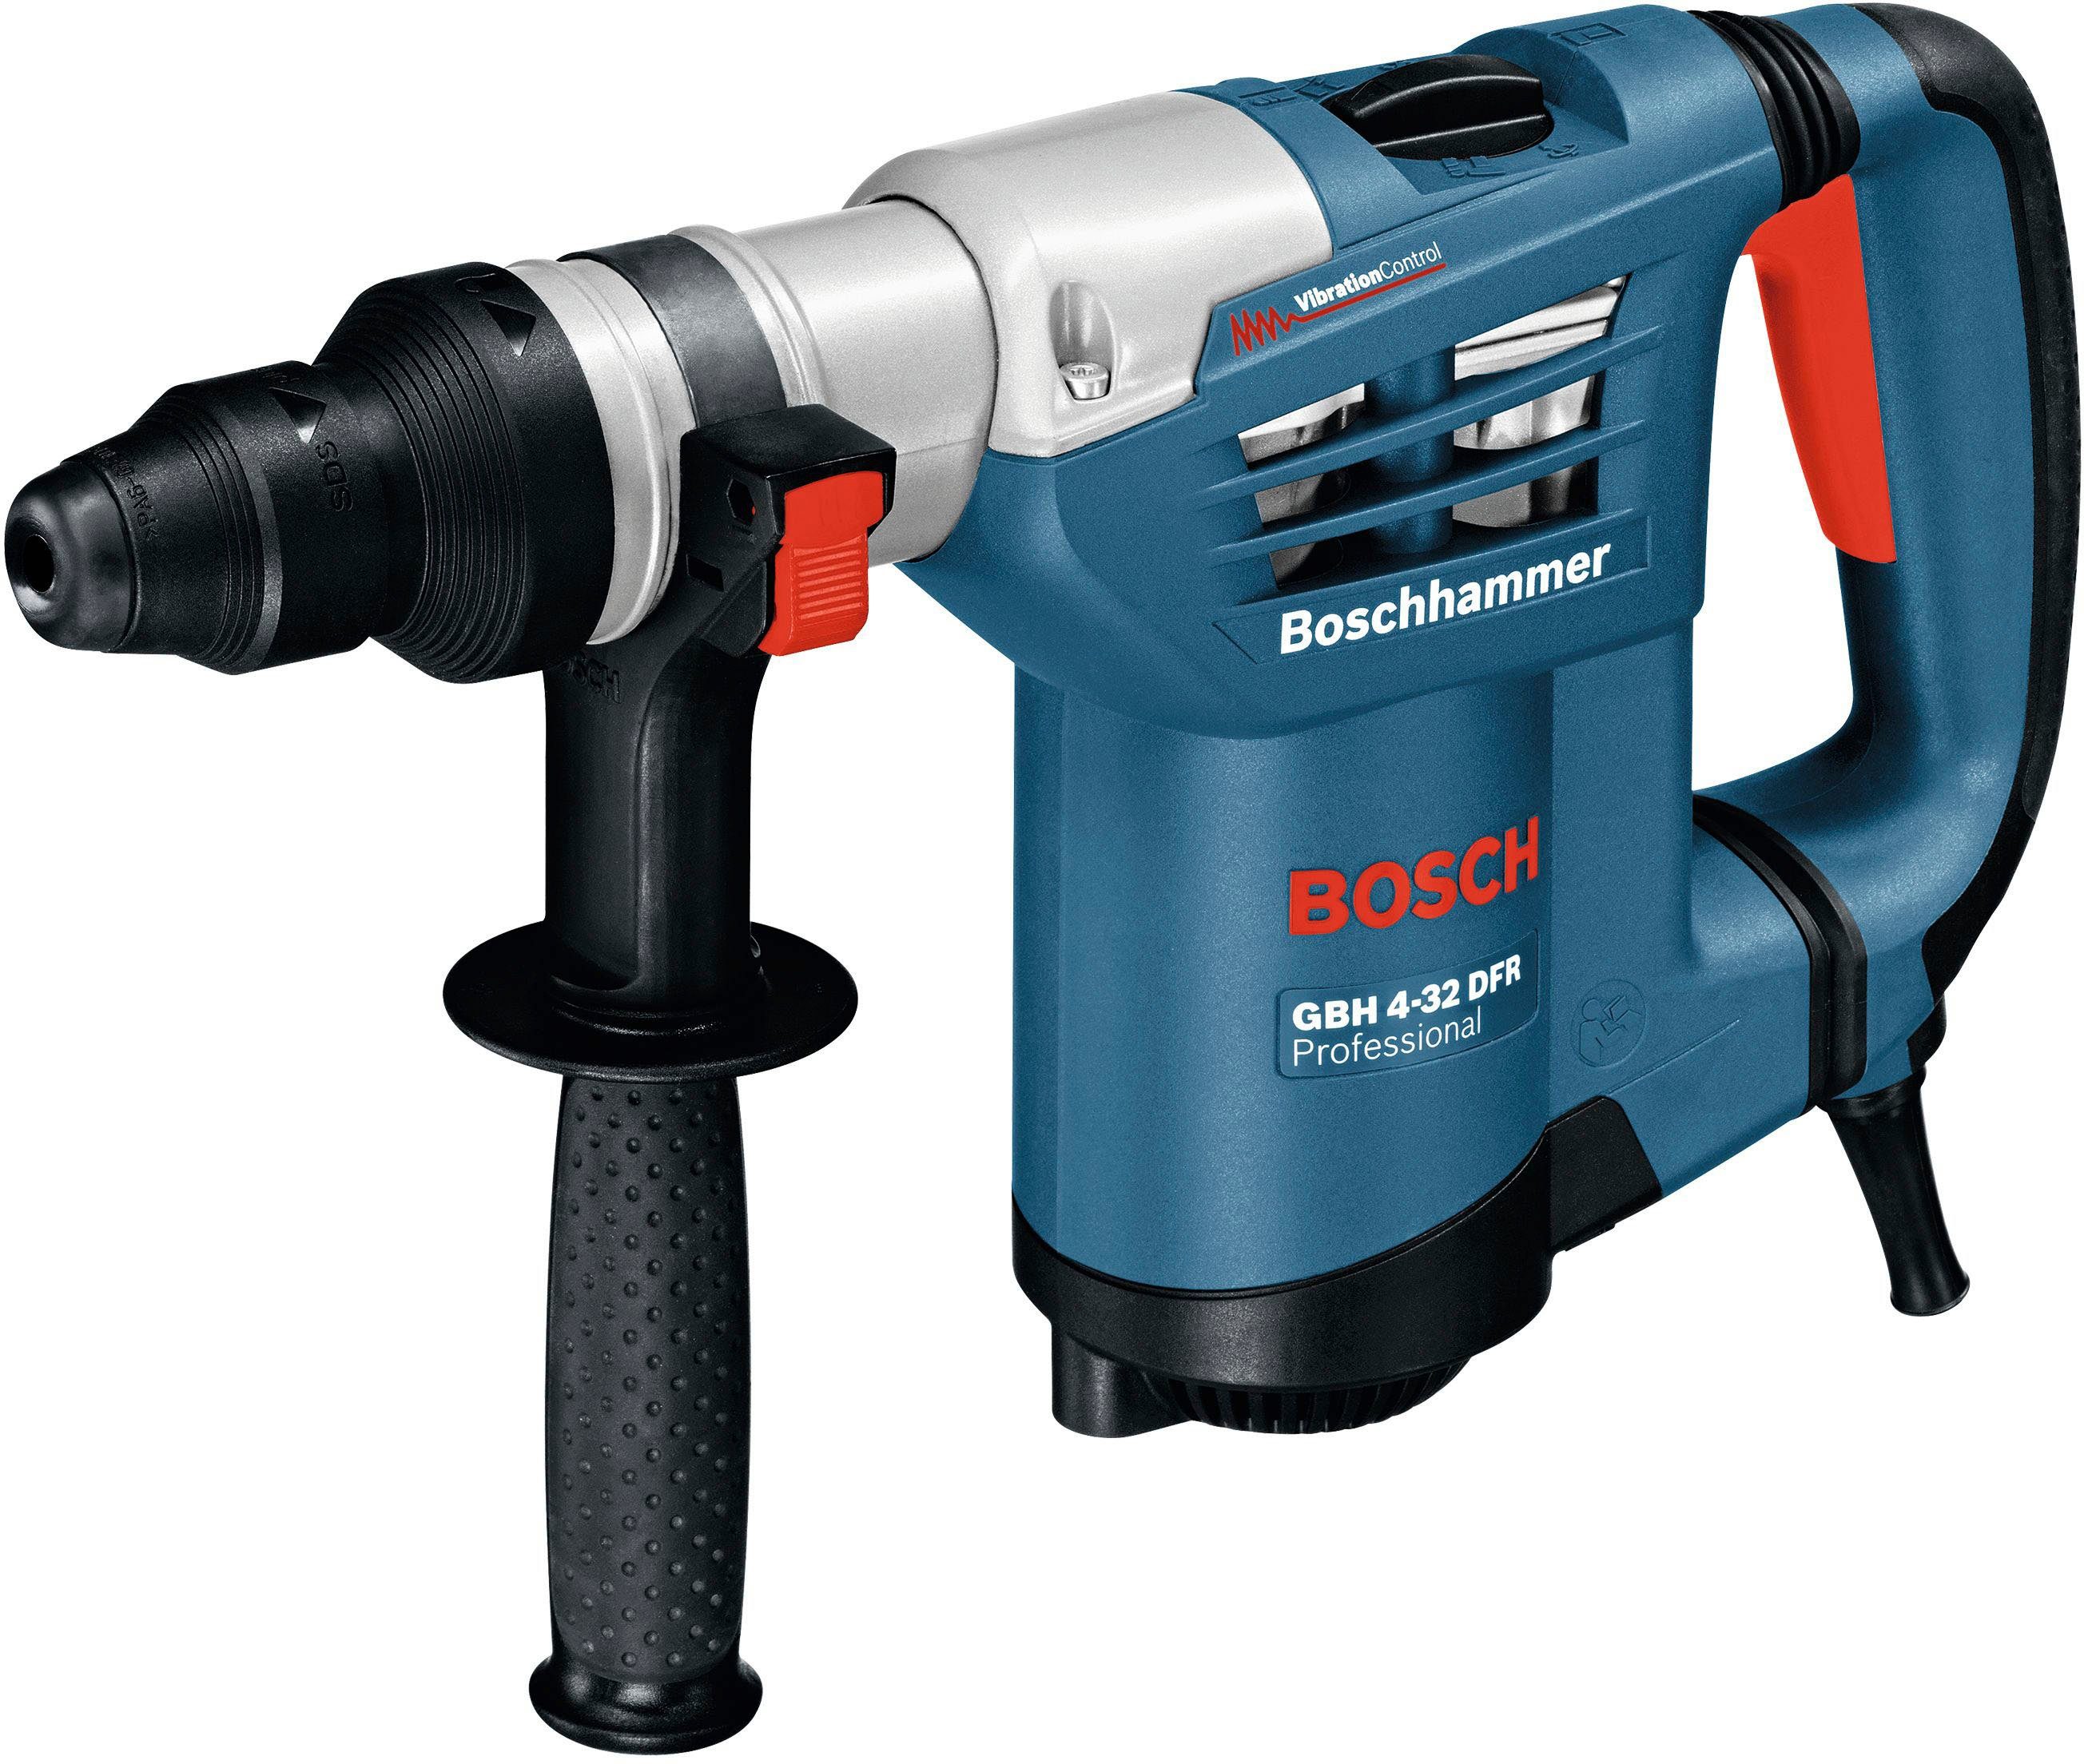 4-32 U/min, Professional (Set) 780 Bosch max. GBH DFR, Bohrhammer